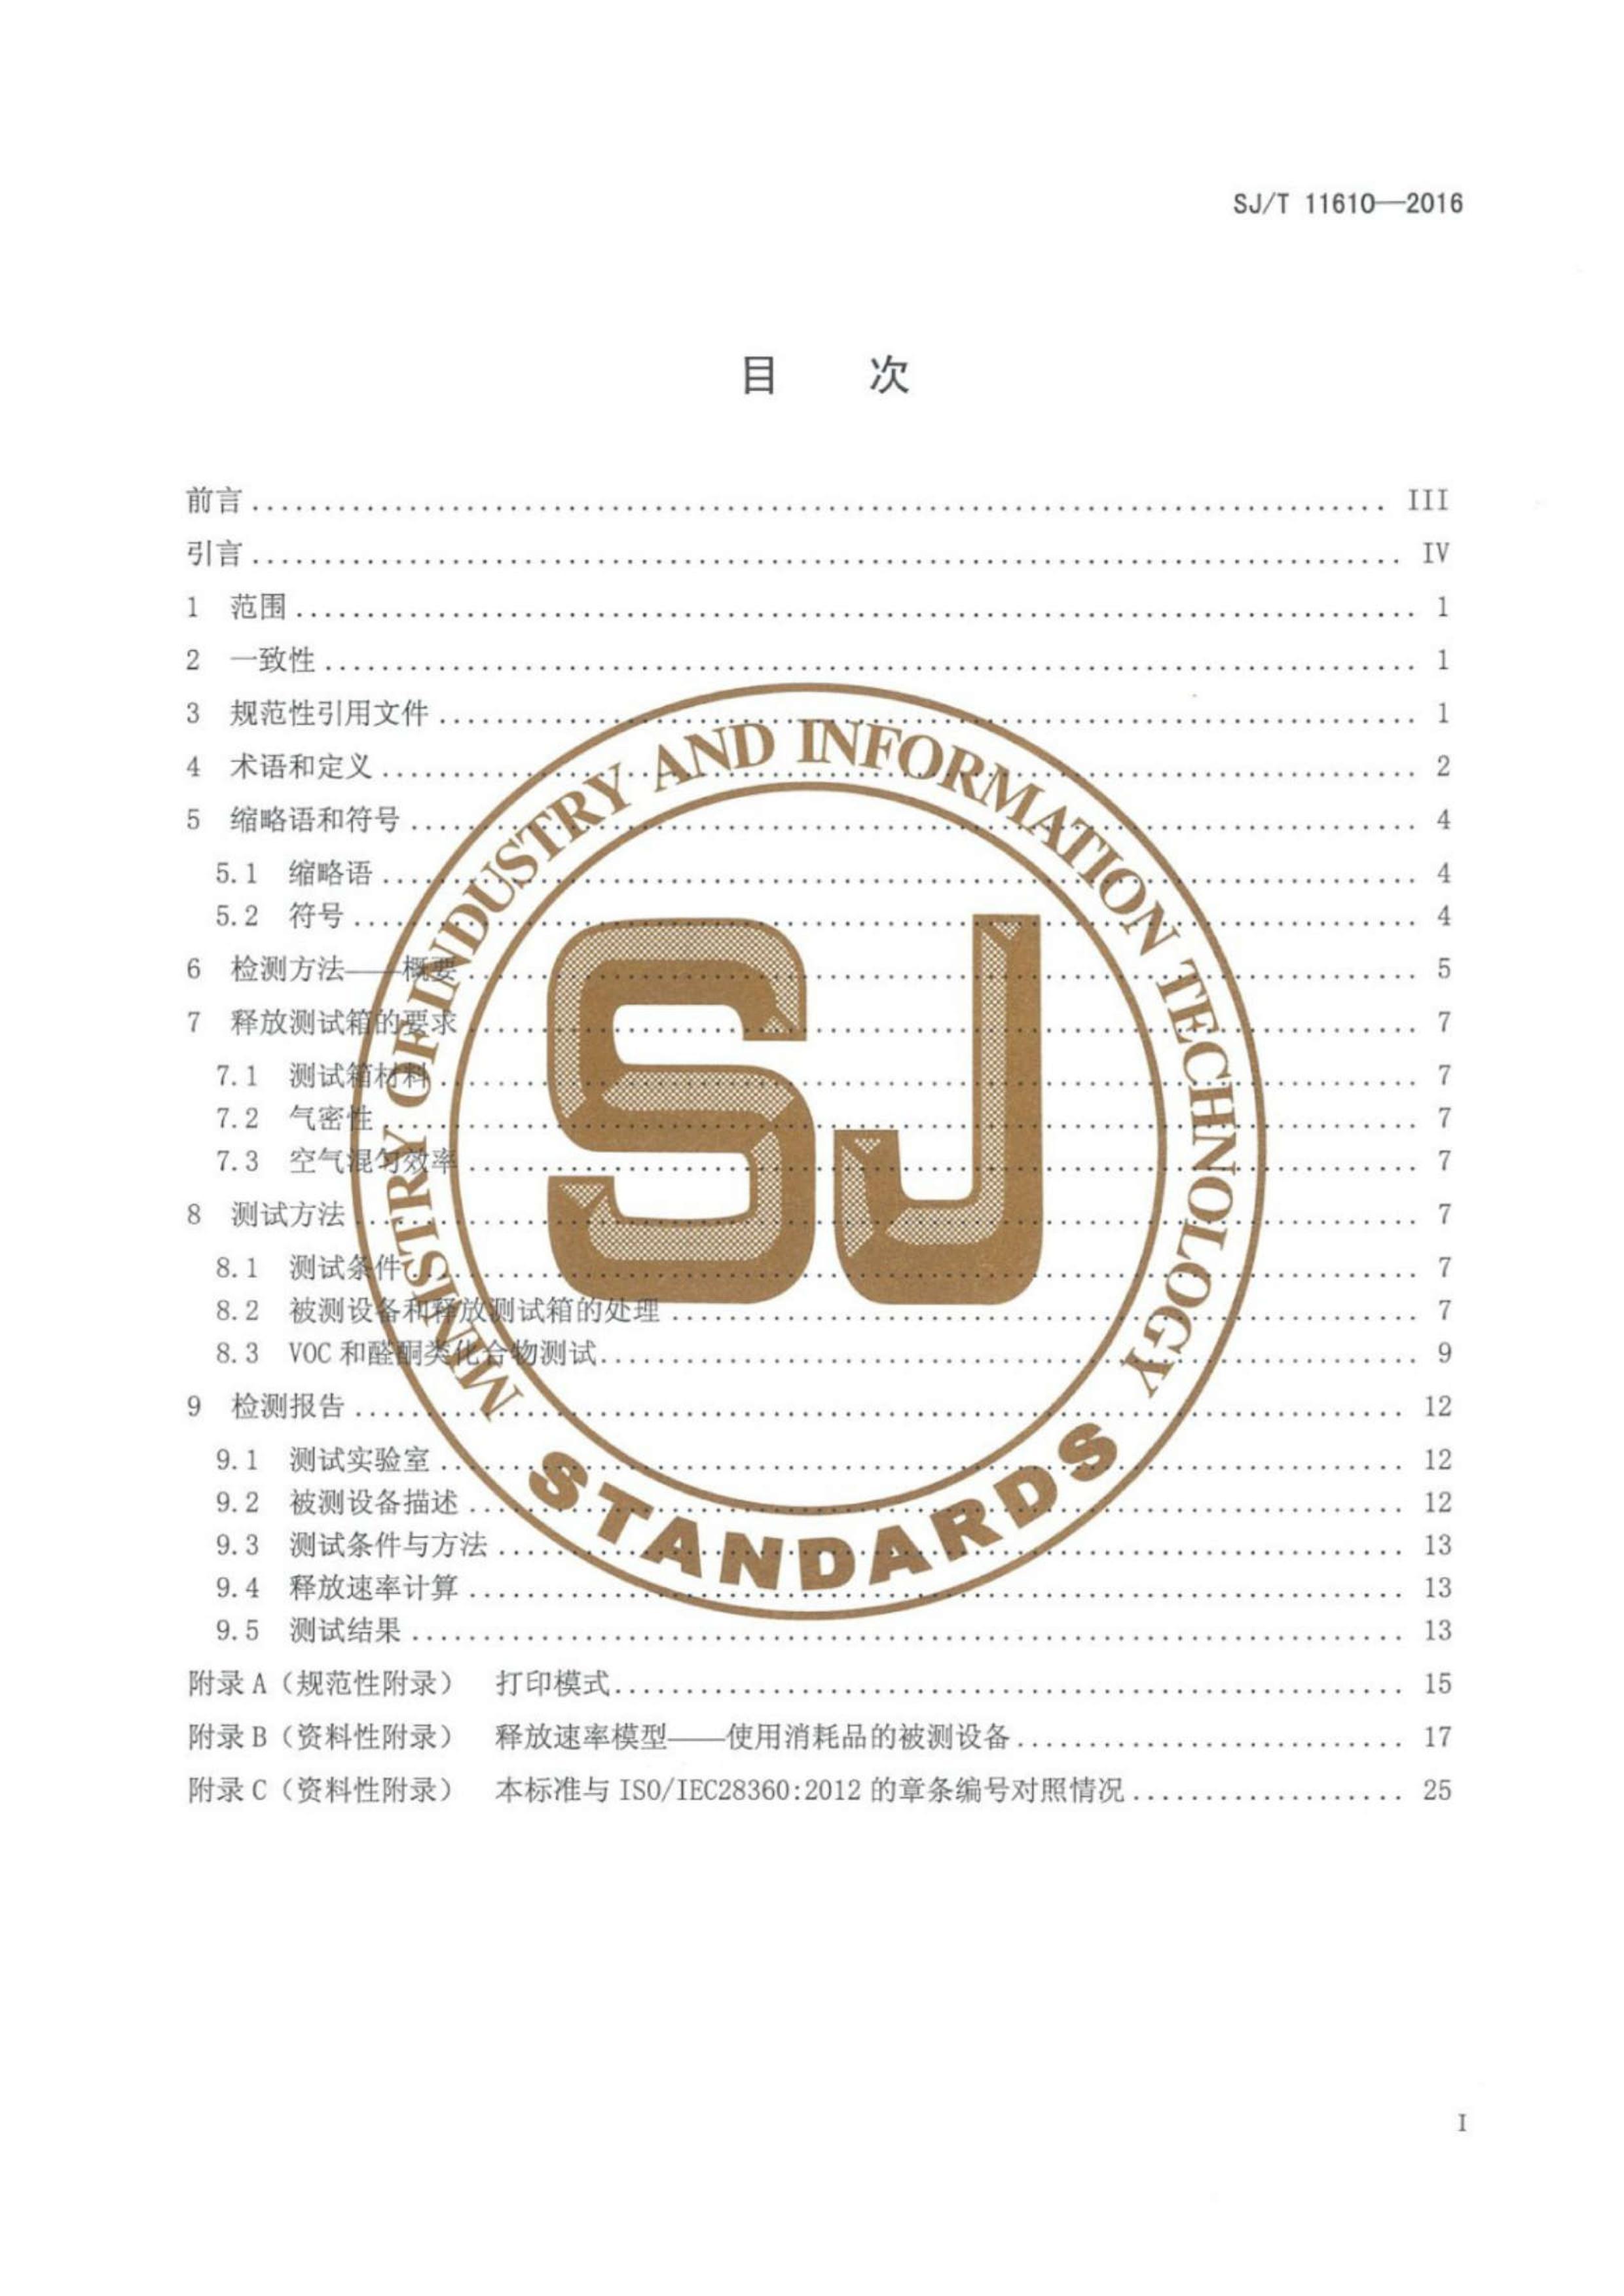 SJT 11610-2016 ӵƷӷлȩͪ໯ͷʼⷽ.pdf2ҳ